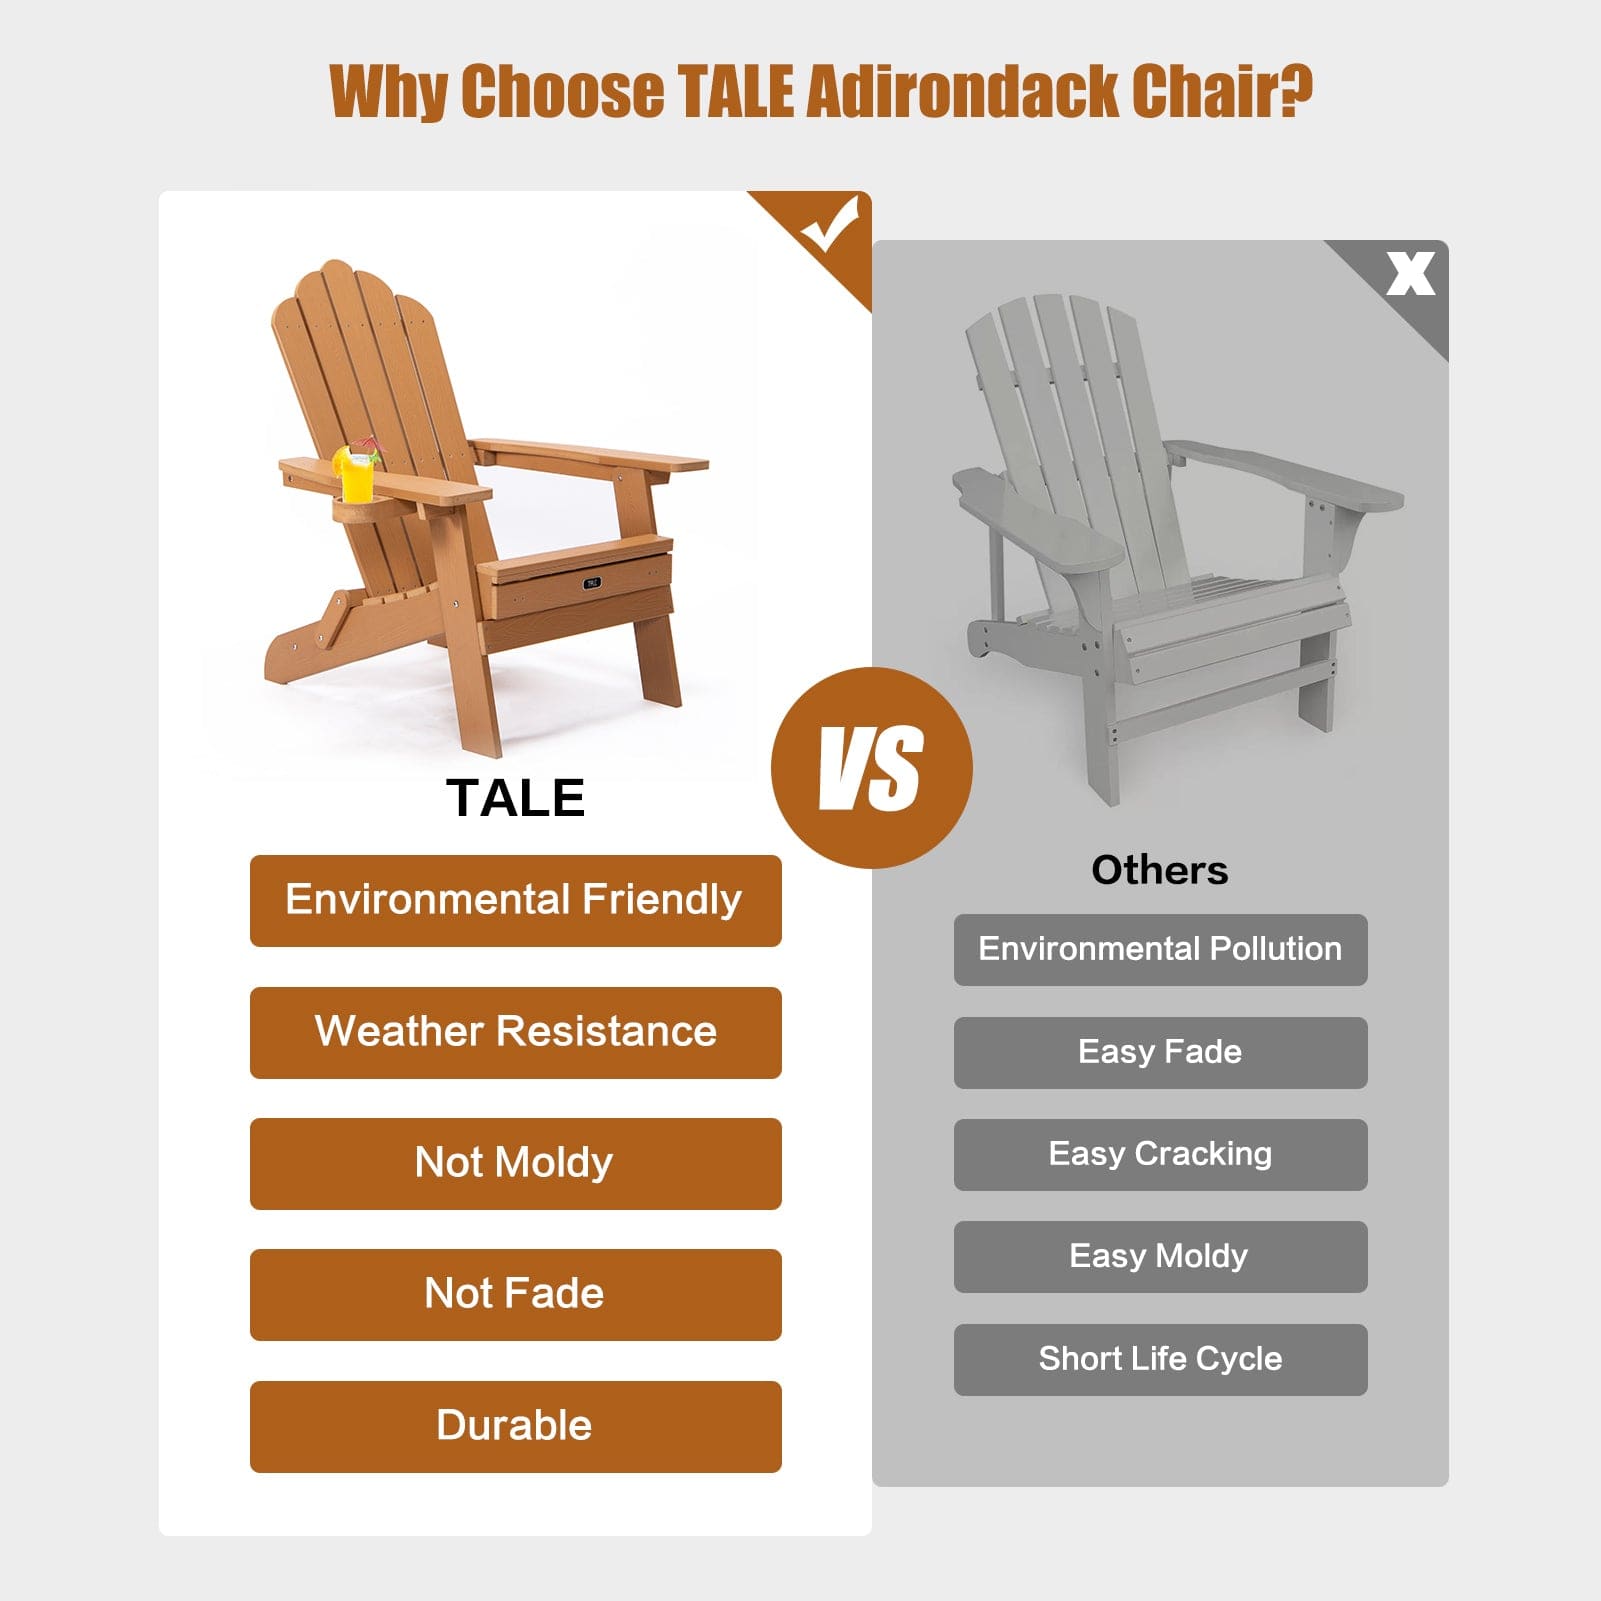 1st Choice Furniture Direct Patio Arm Chair 1st Choice Patio Deck Garden Adirondack Chair w/ Cup Holder & Ottoman